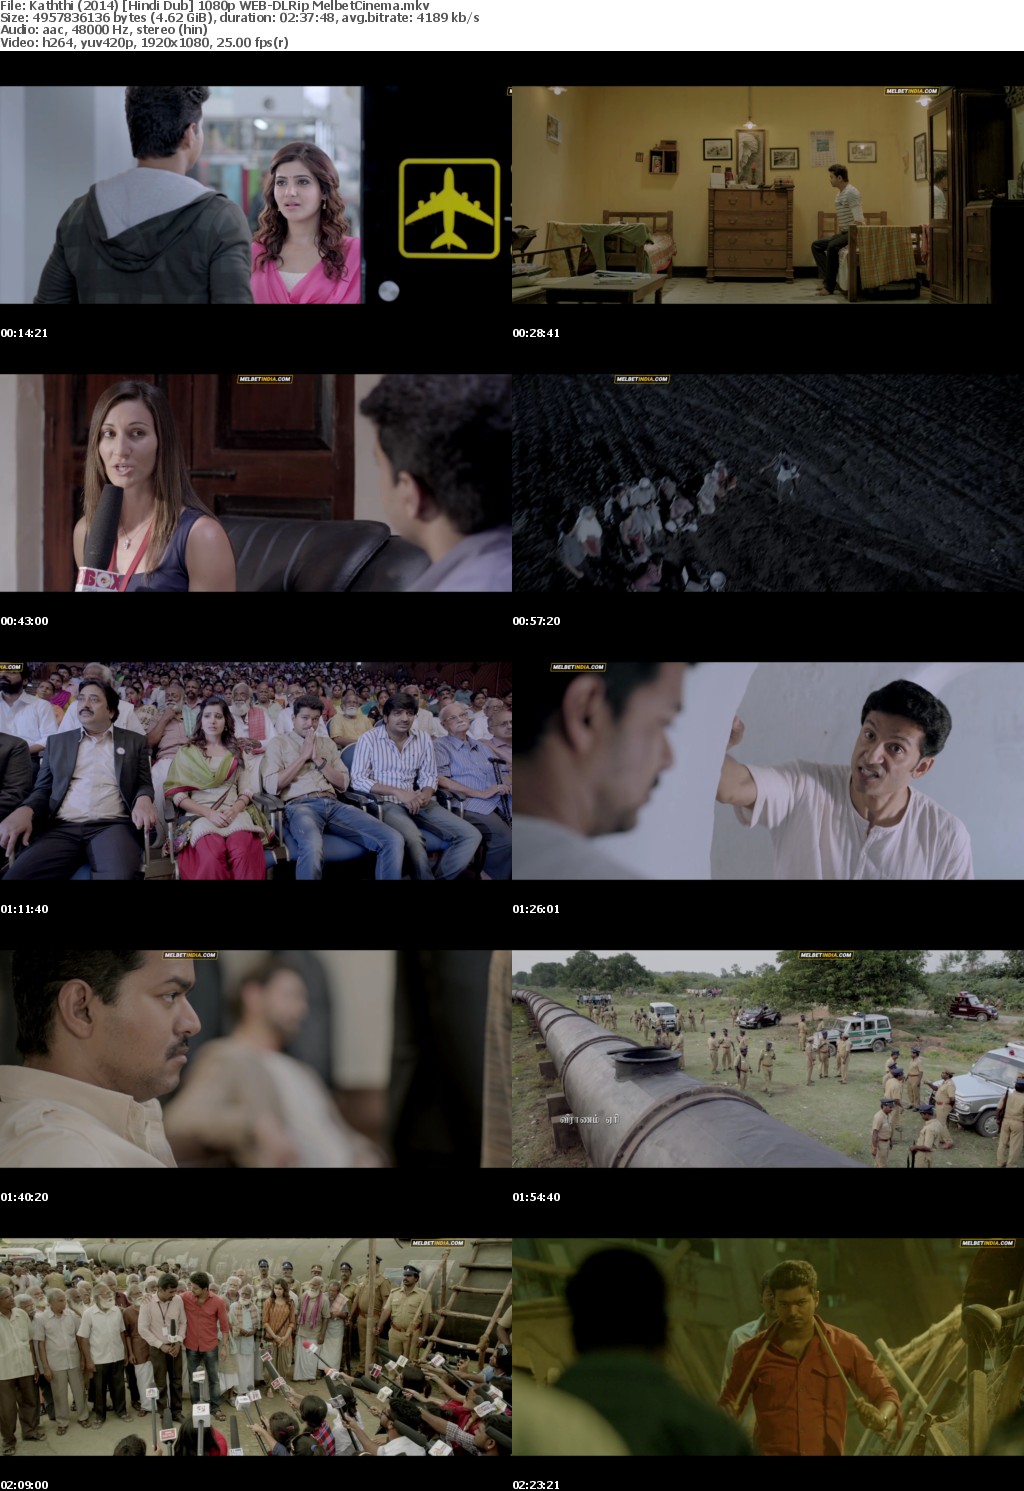 Kaththi (2014) Hindi Dub 1080p WEB-DLRip MelbetCinema